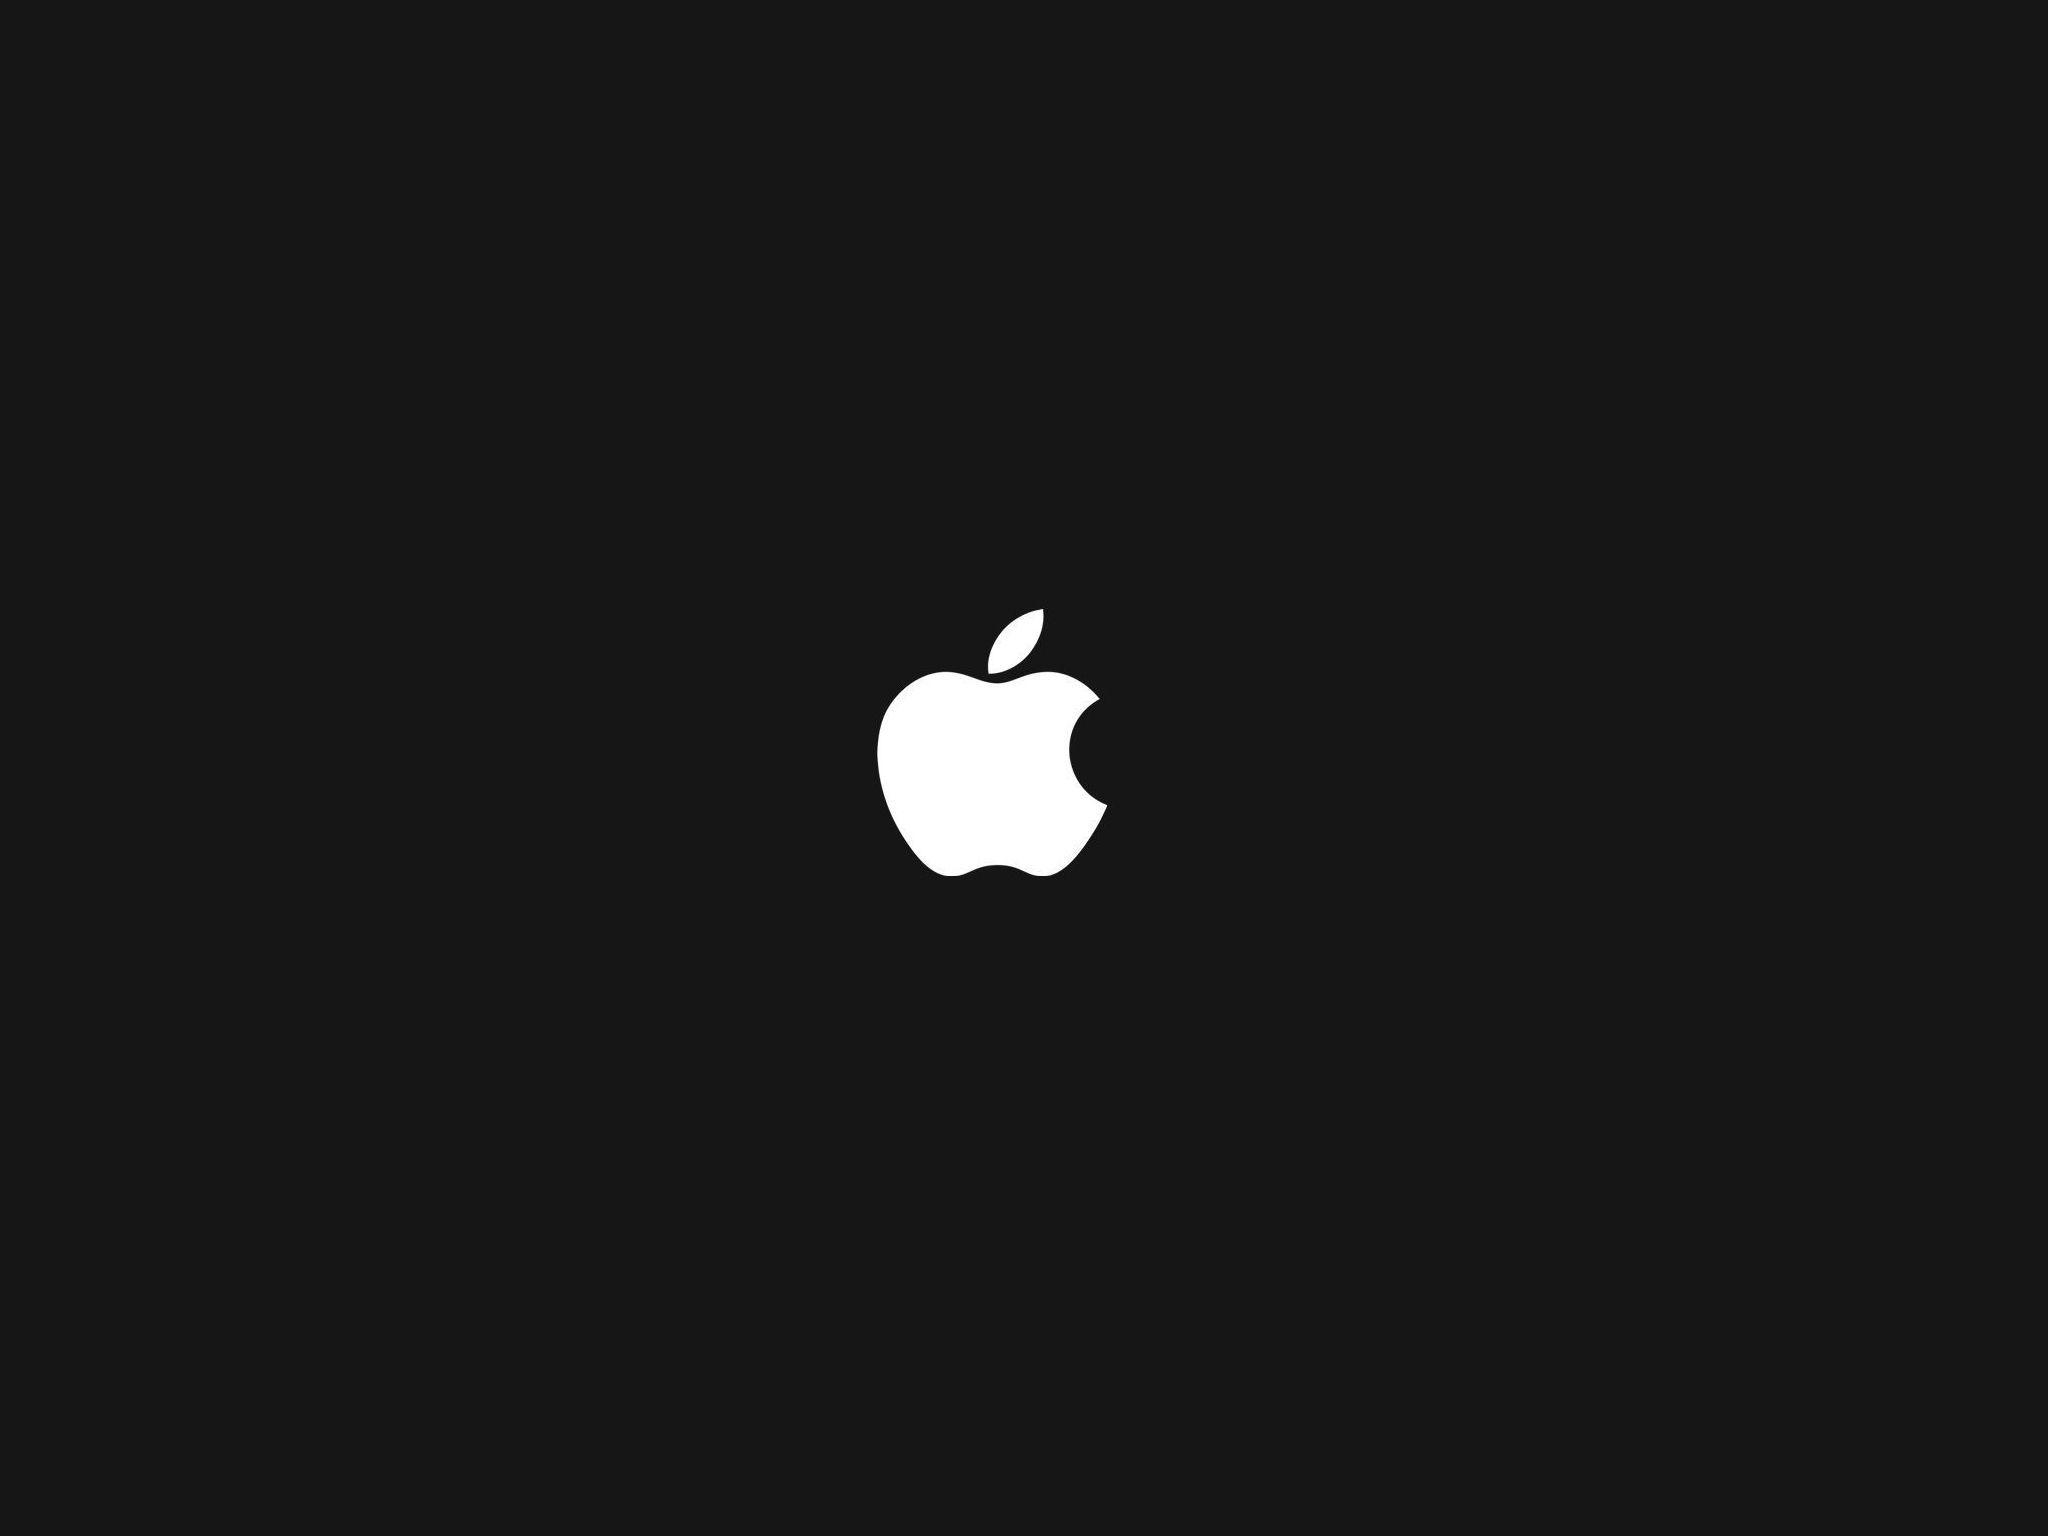 All Black Apple Logo - Computer: Apple Logo (black), picture nr. 27779